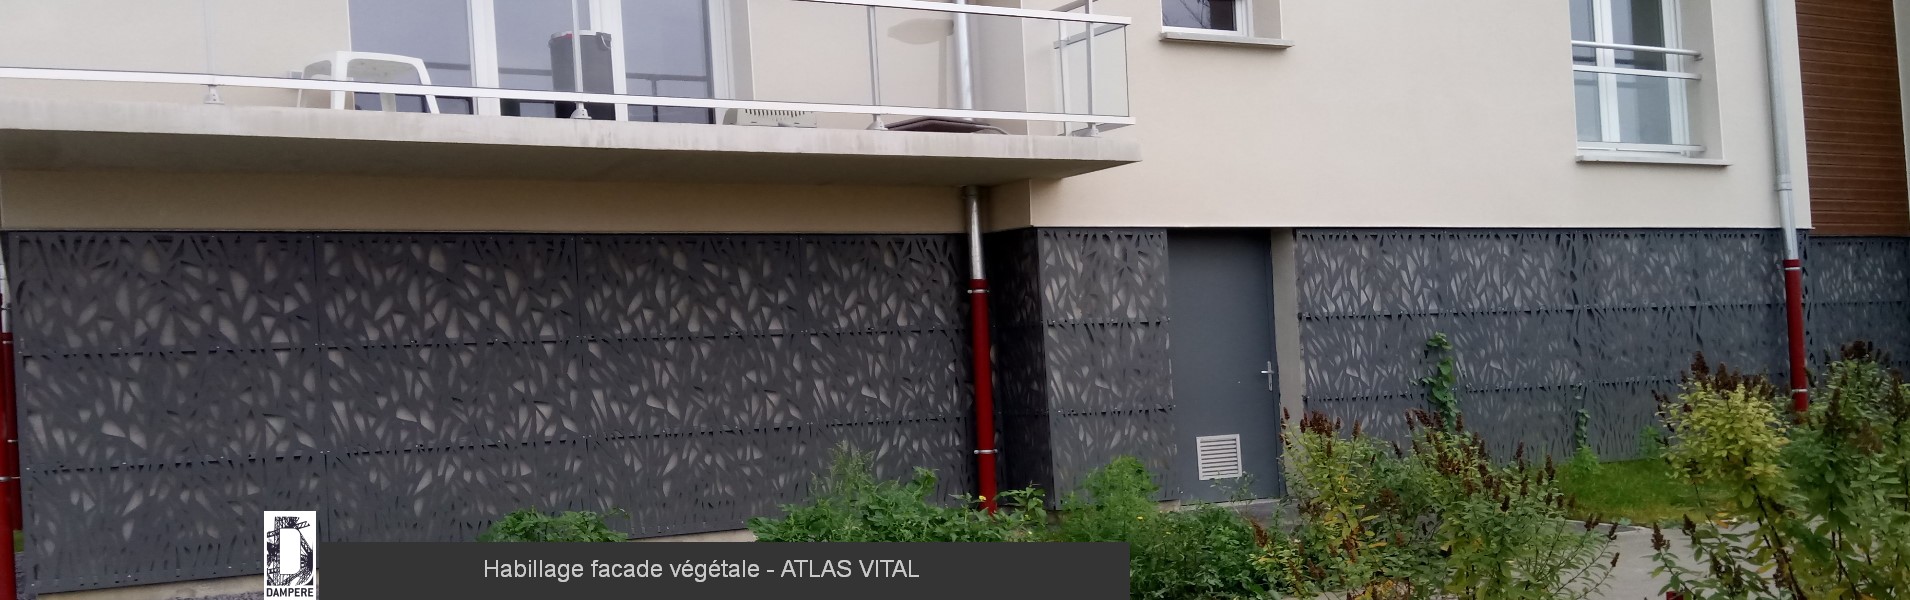 Habillage facade vegetale ATLAS VITAL 6